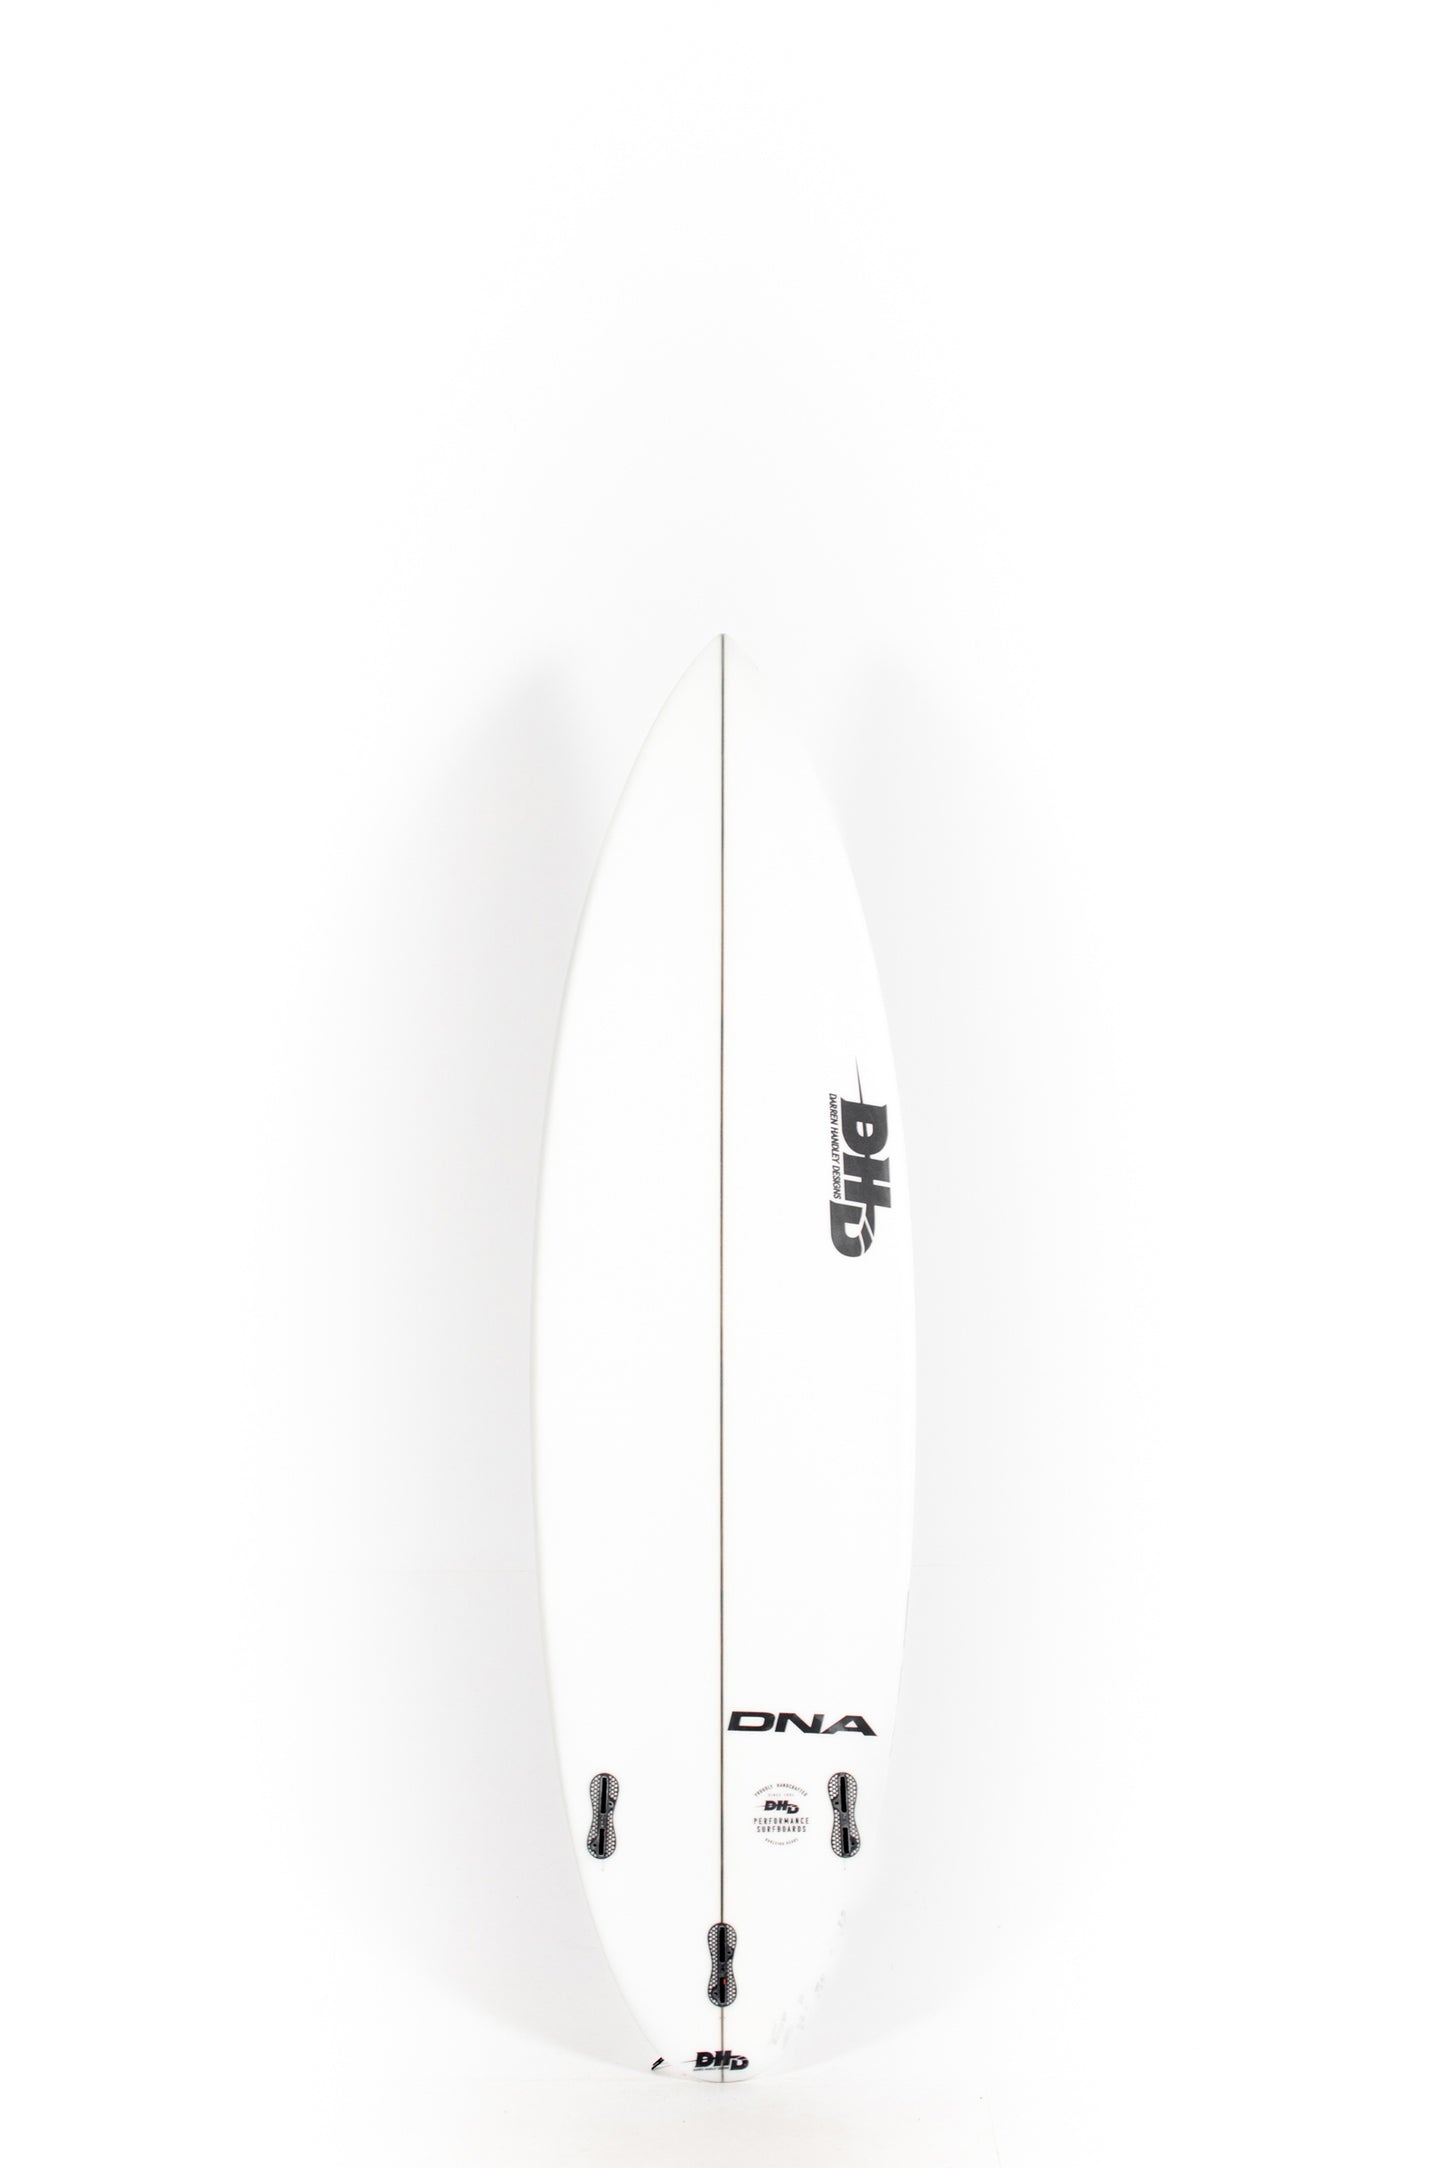 Pukas Surf Shop - DHD - DNA by Darren Handley - 6'3" x 19 3/8 x 2 7/16 x 32L - DHDDNA63